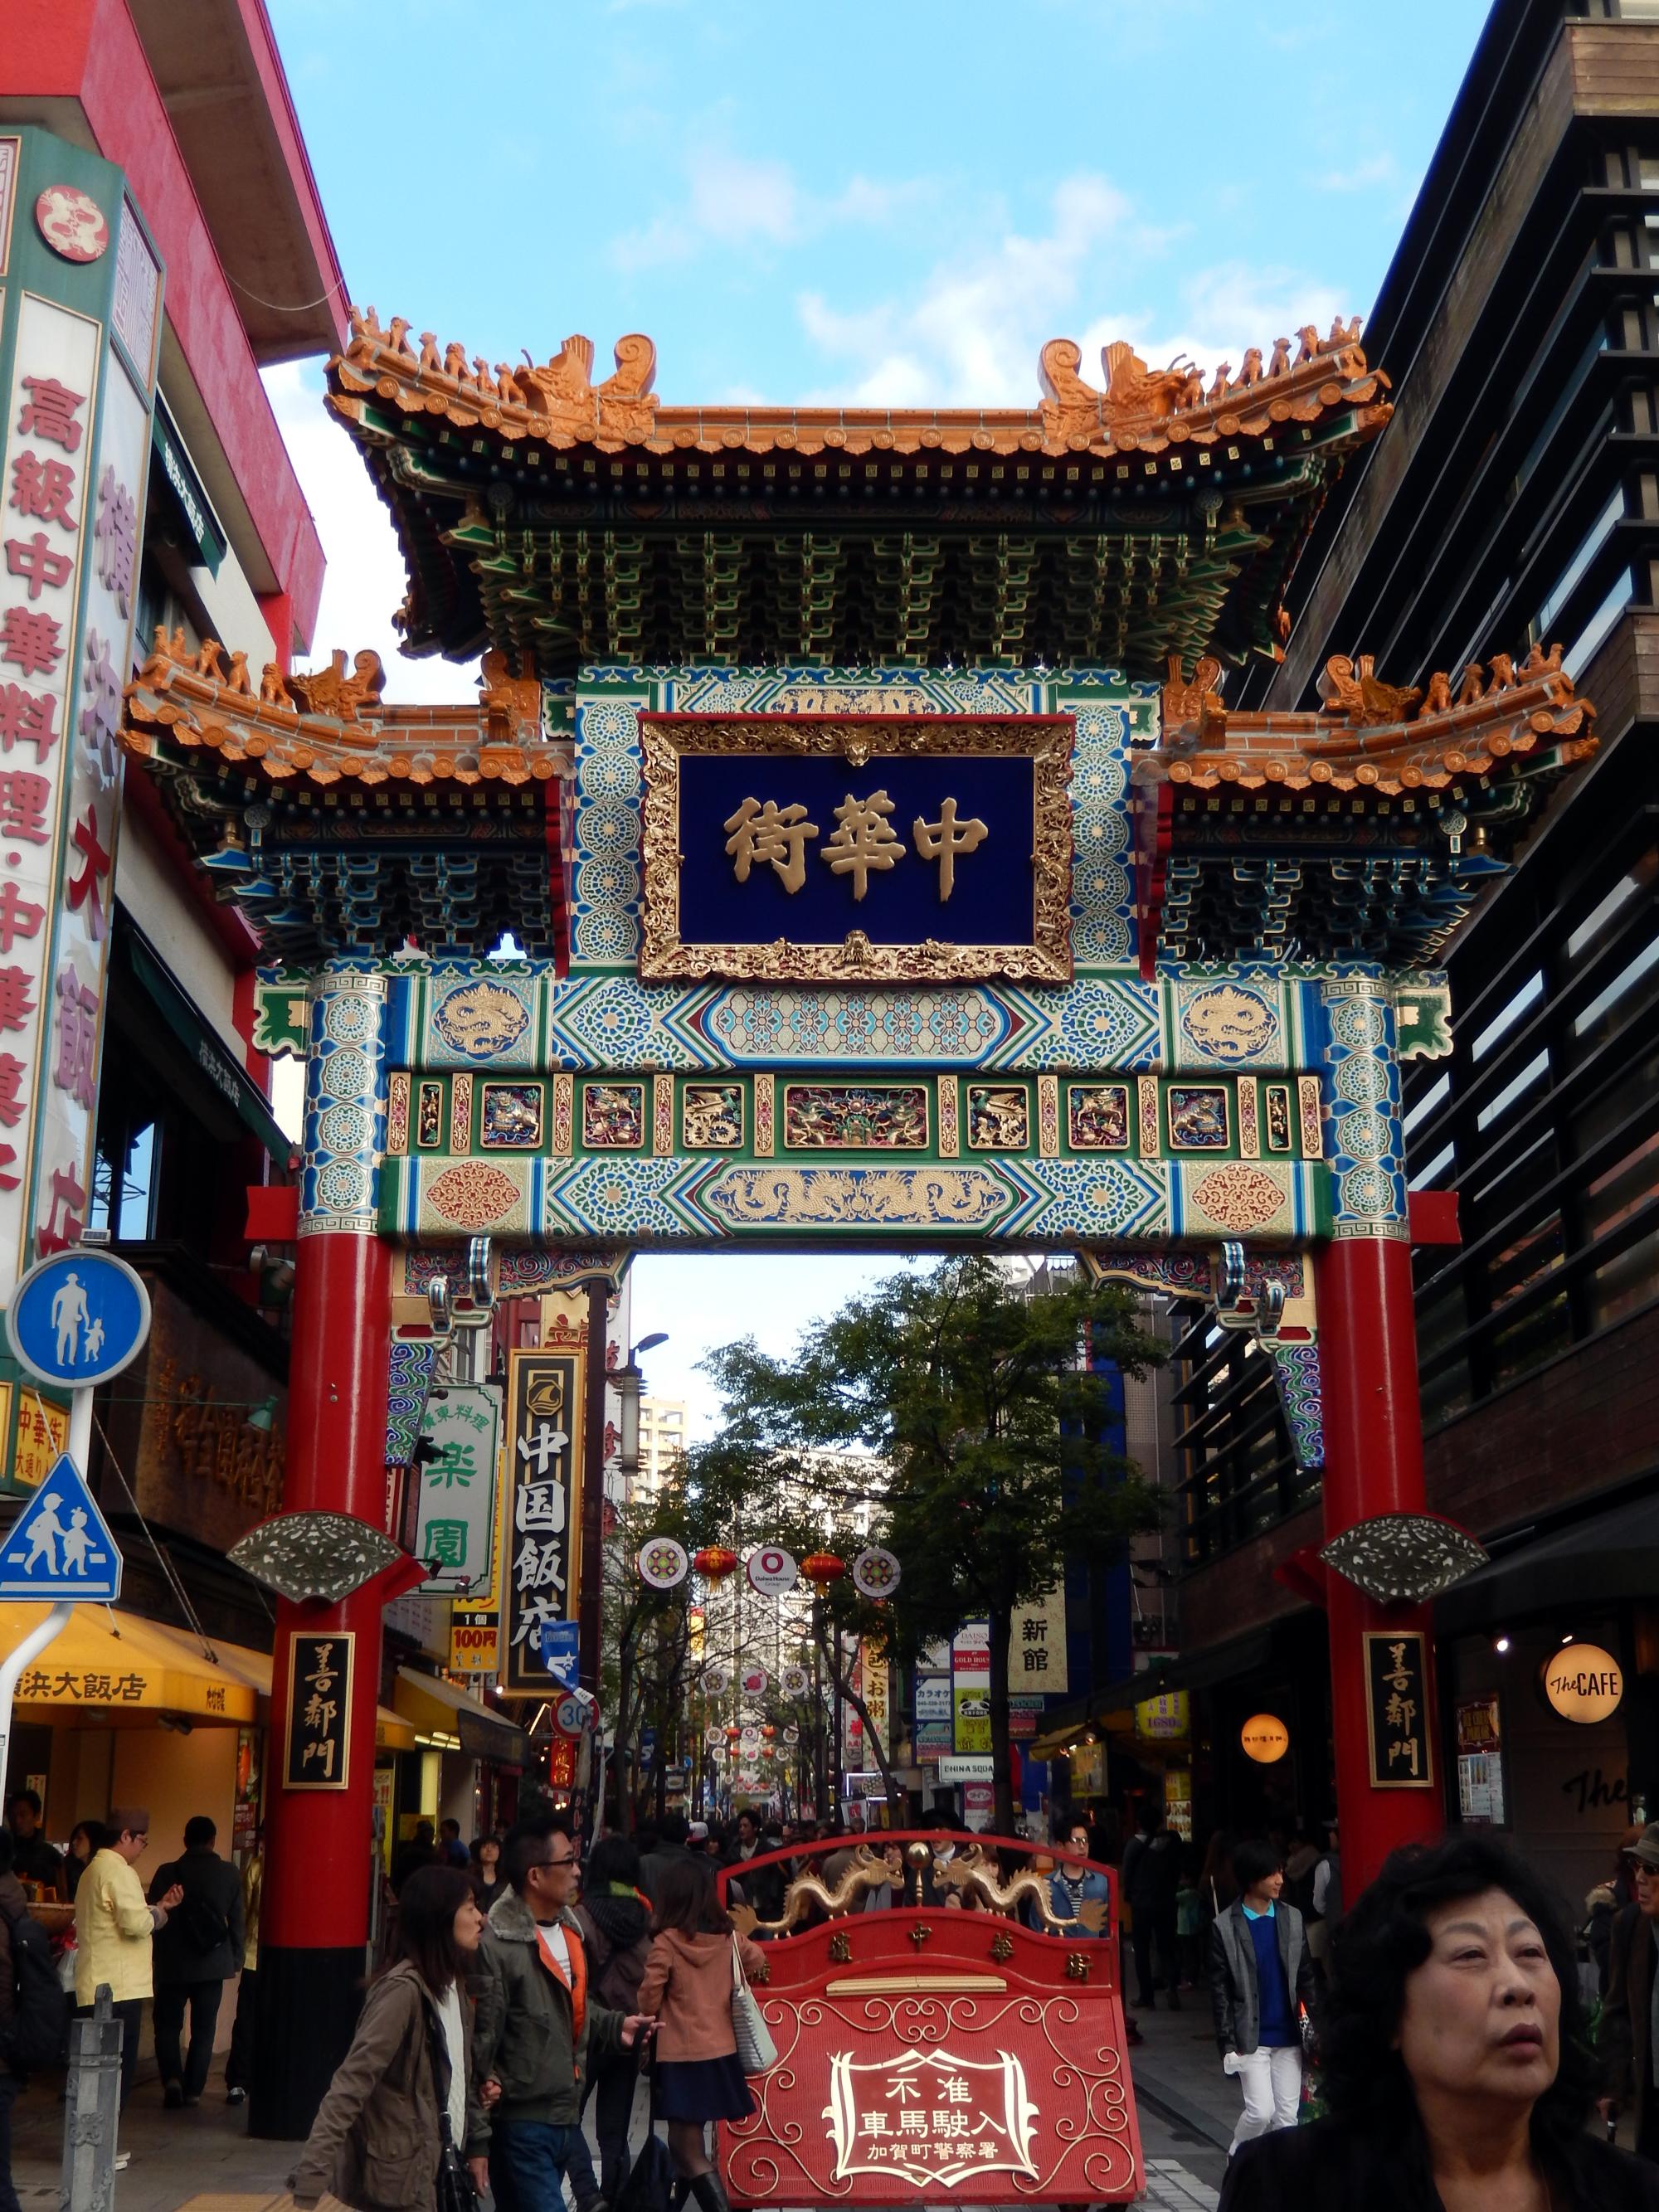 Japan (2015) - Chinatown Entrance #3